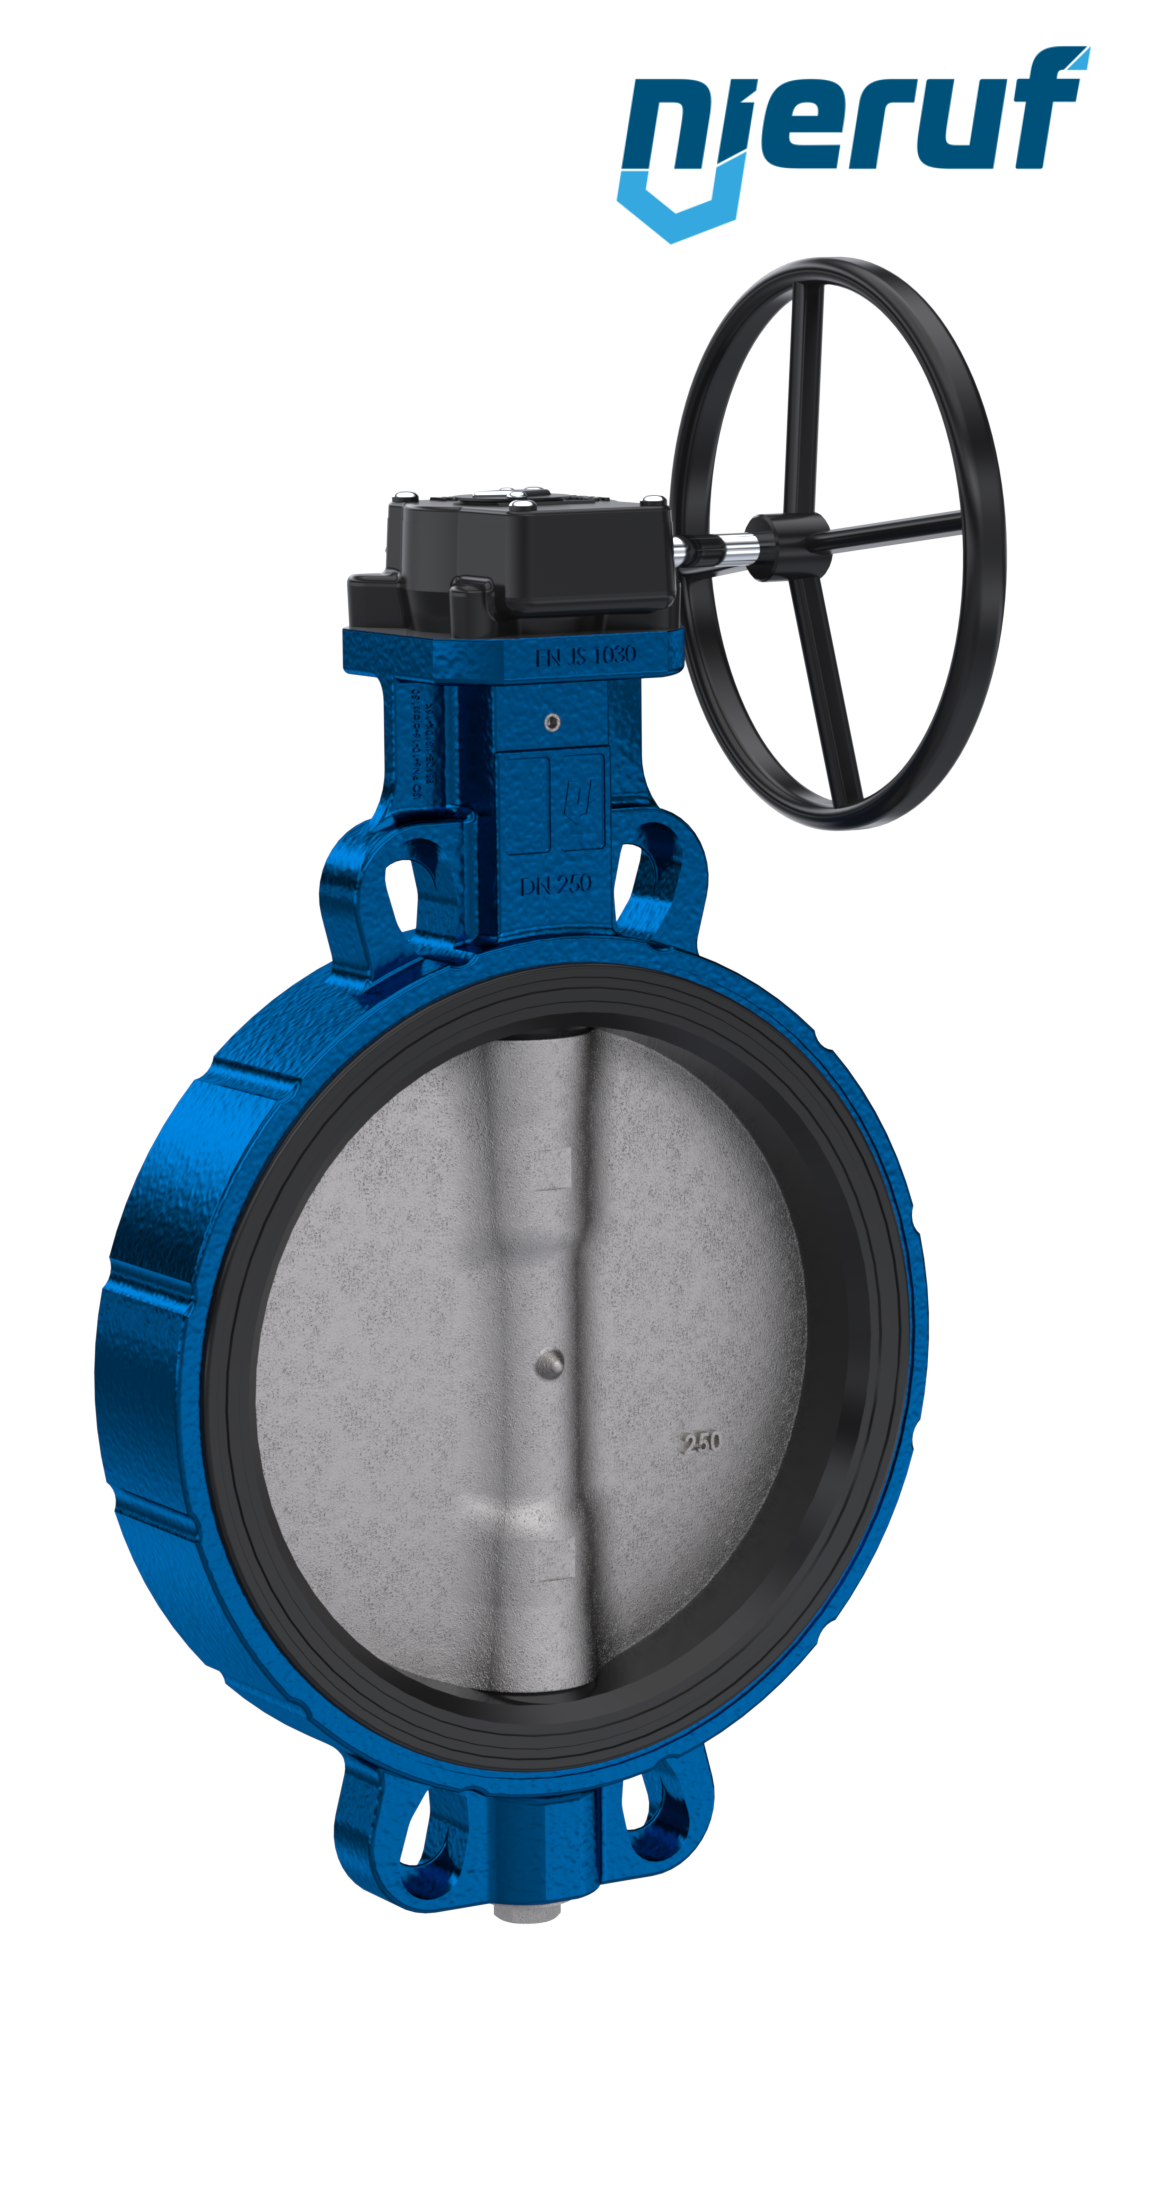 Butterfly valve AK01 DN 250 PN6-PN10-PN16 & ANSI150 DVGW-water Worm gear